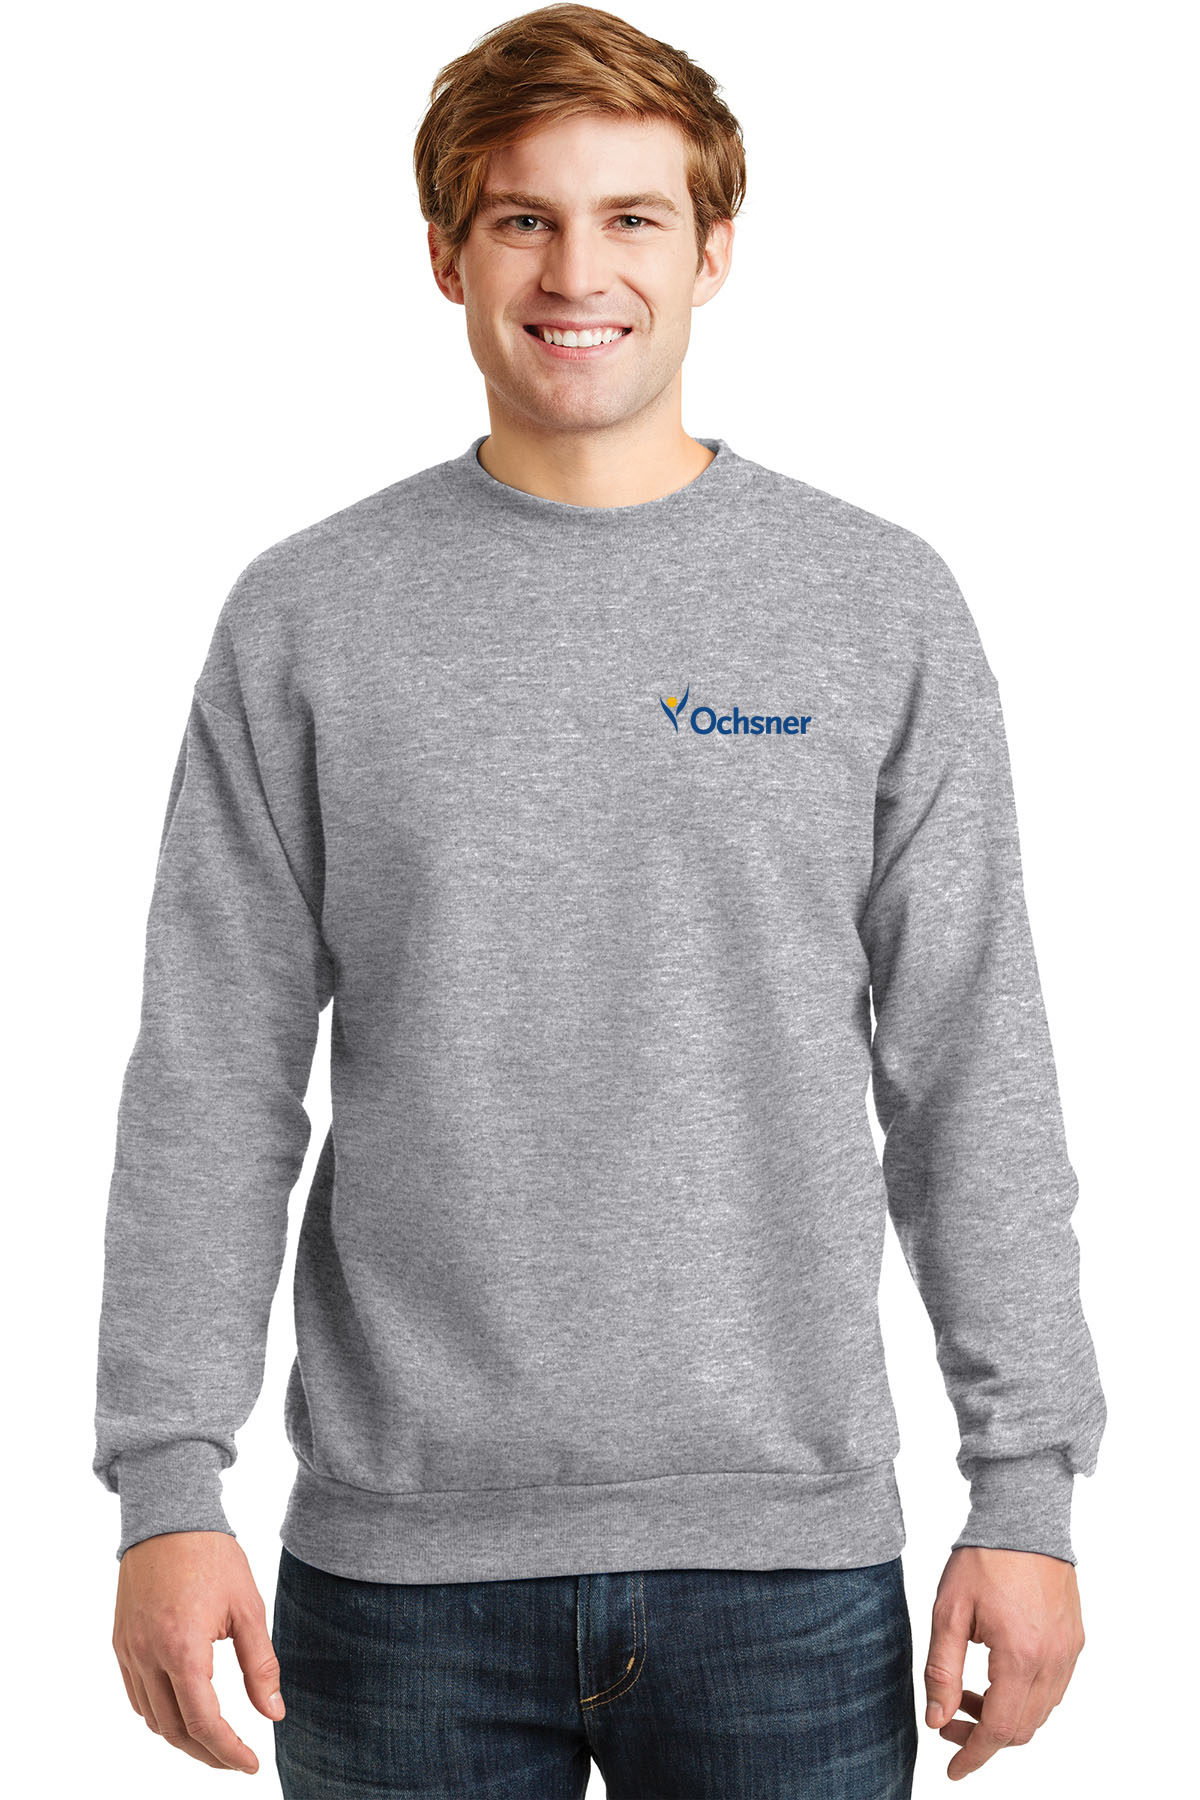 Hanes Unisex Ecosmart Sweatshirt, , large image number 3